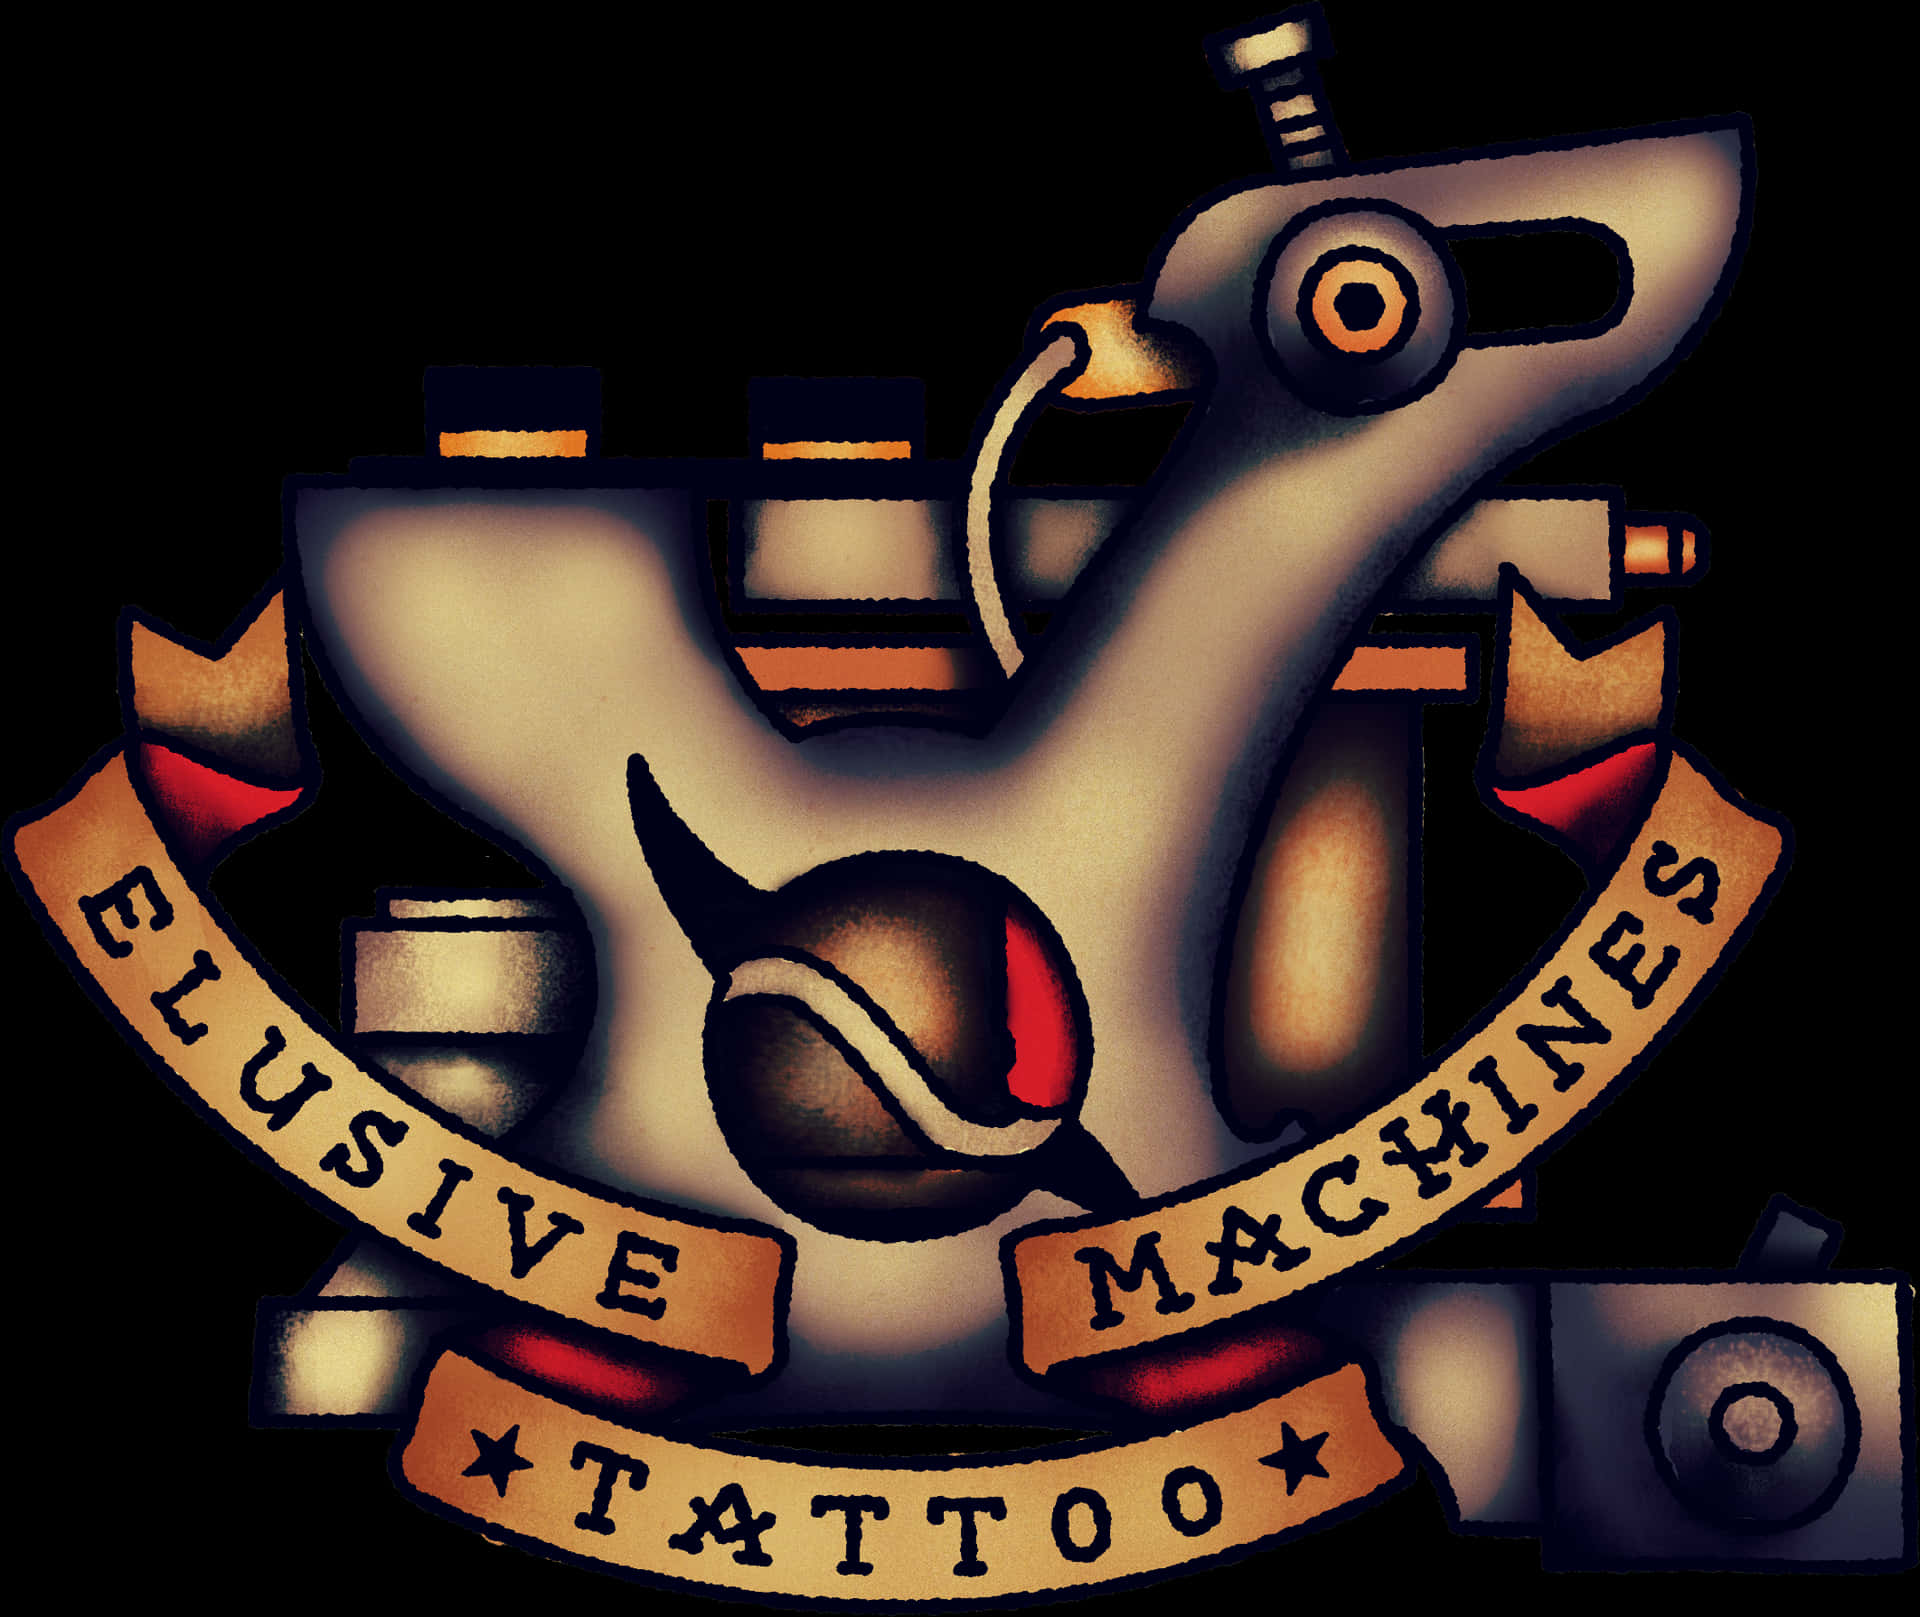 Tattoo Machine Emblem PNG image